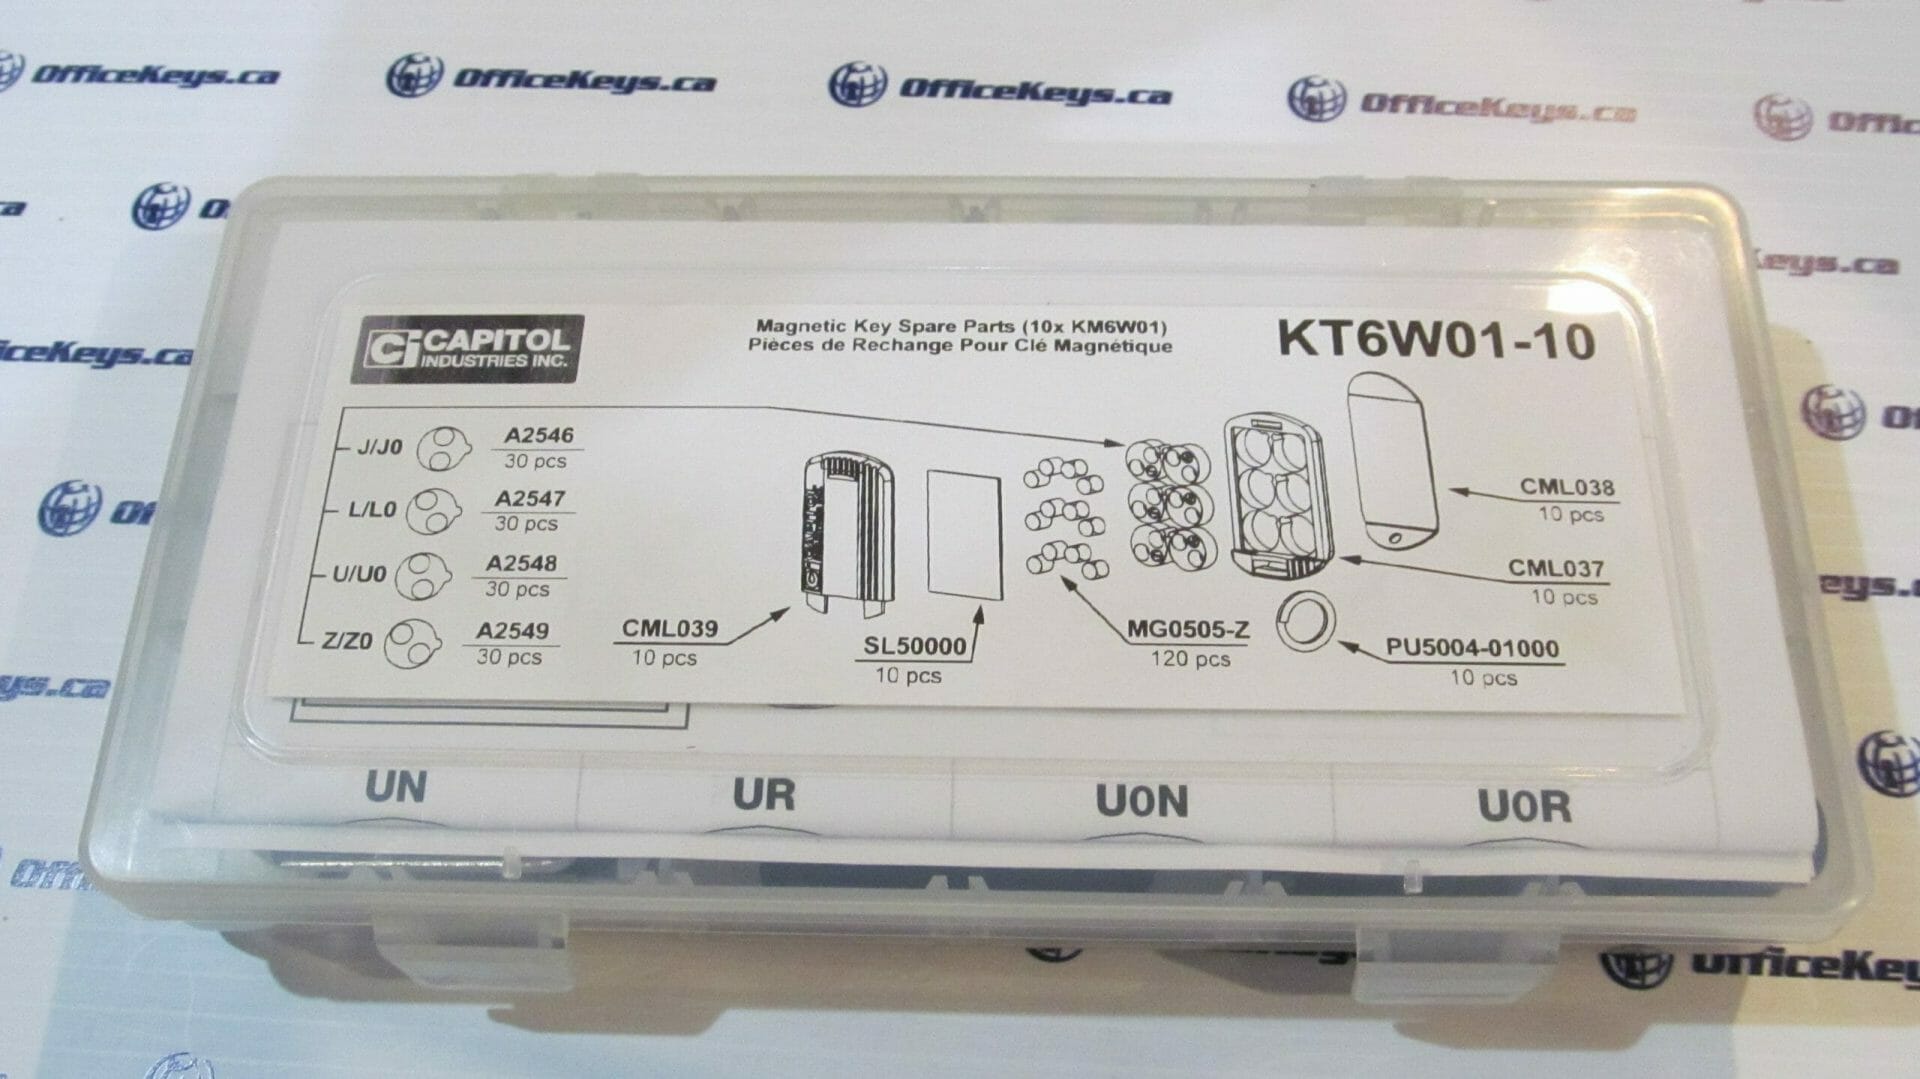 Capitol Magnetic Padlock Re-Keying Kit KT6W01-10